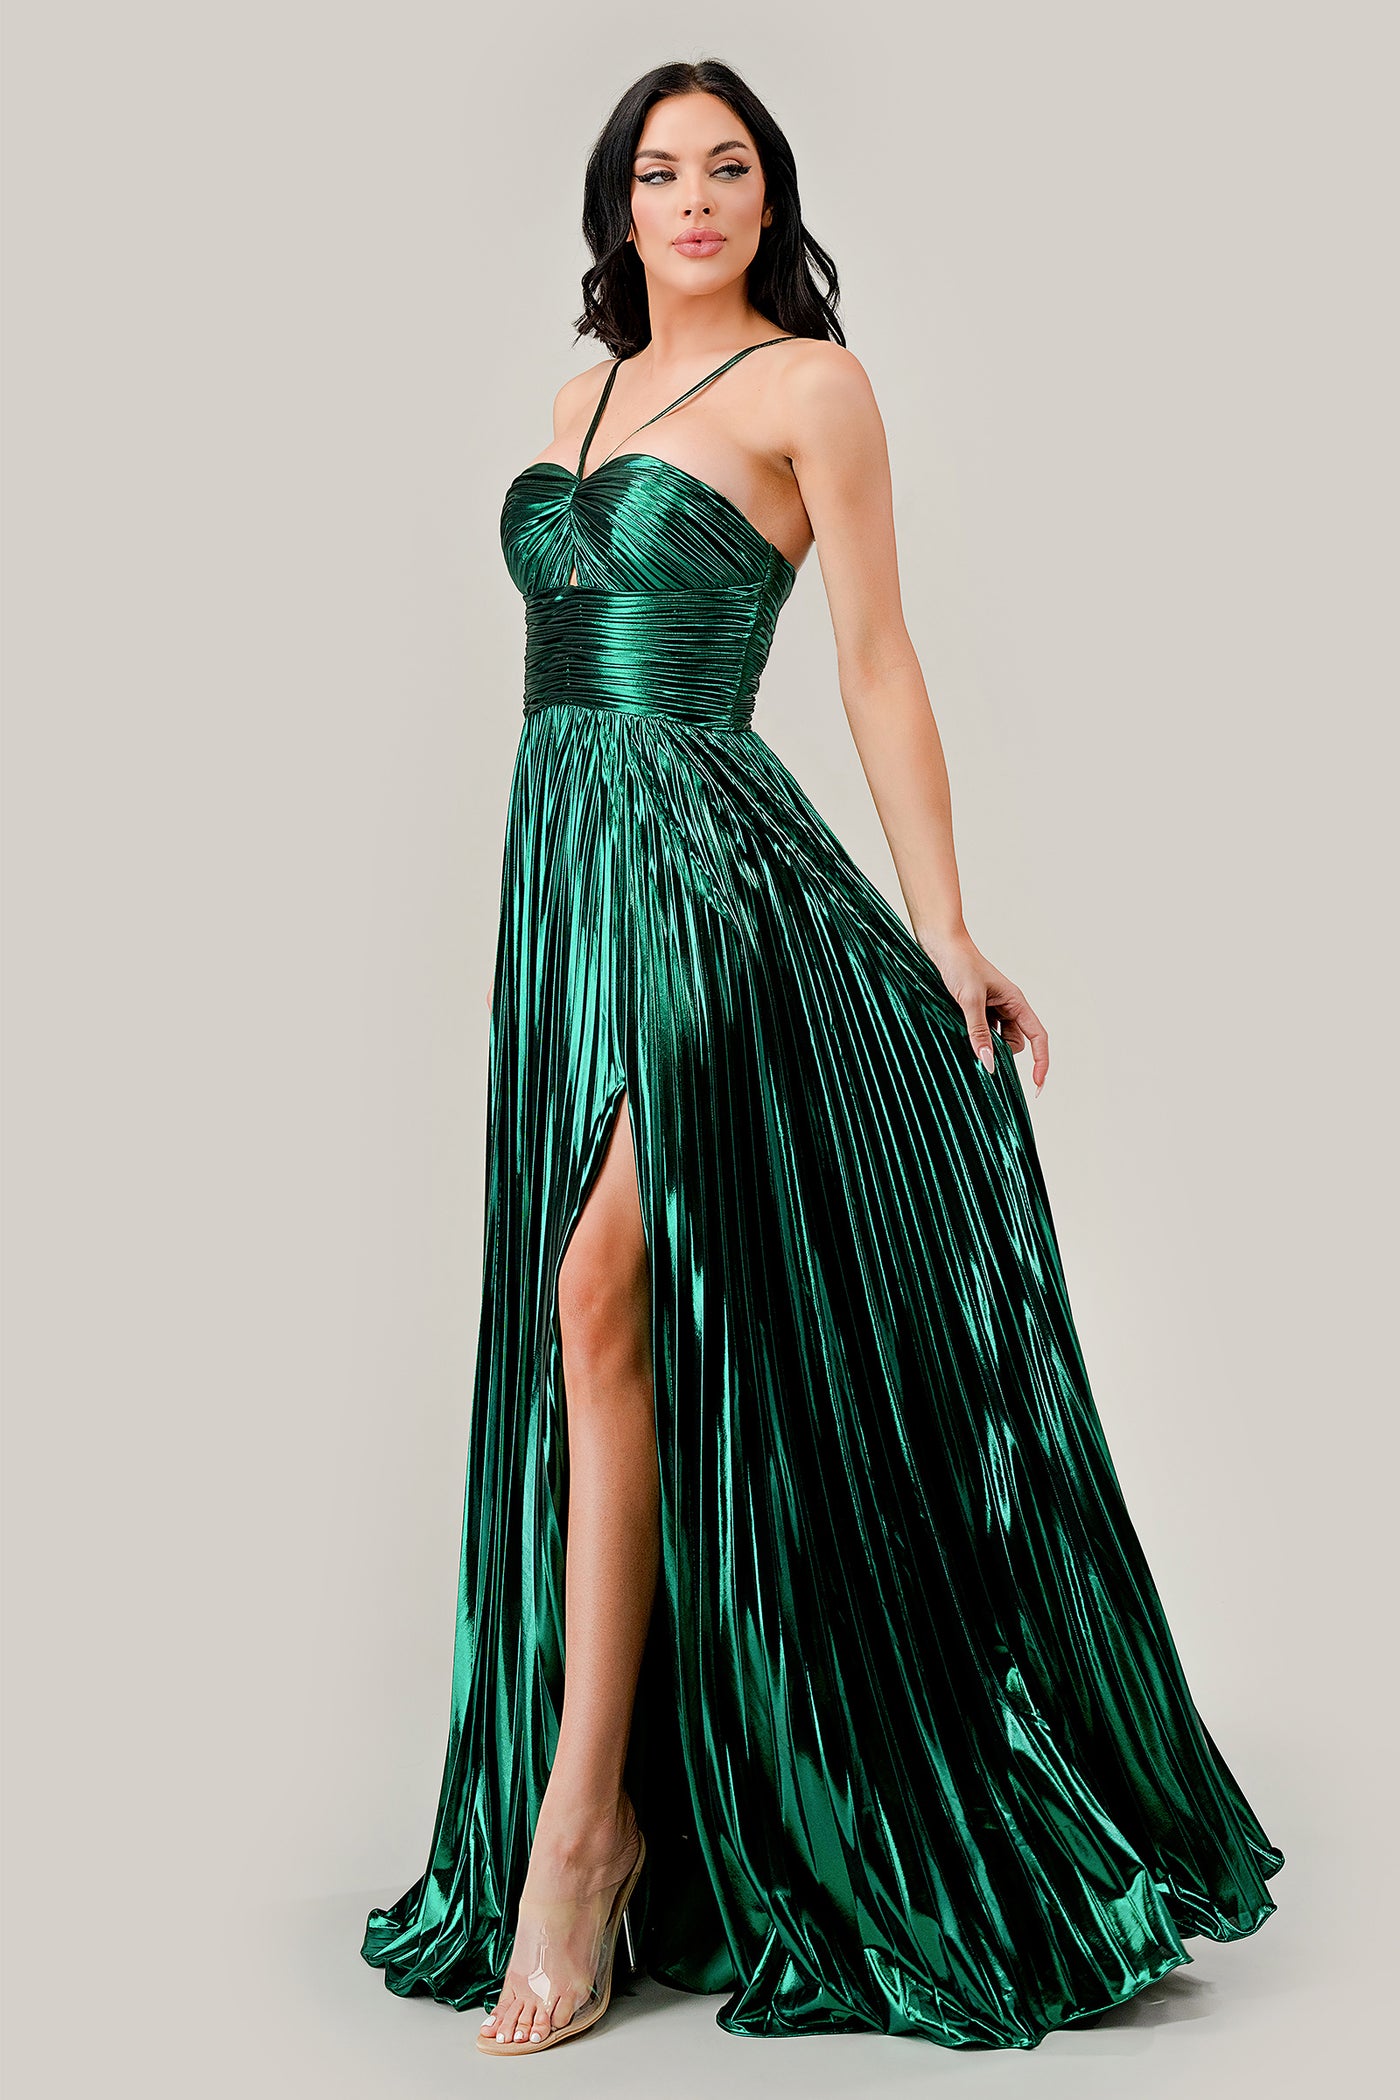 Cinderella Divine C153 B Chic Fashions Long Dress Evening Gowns